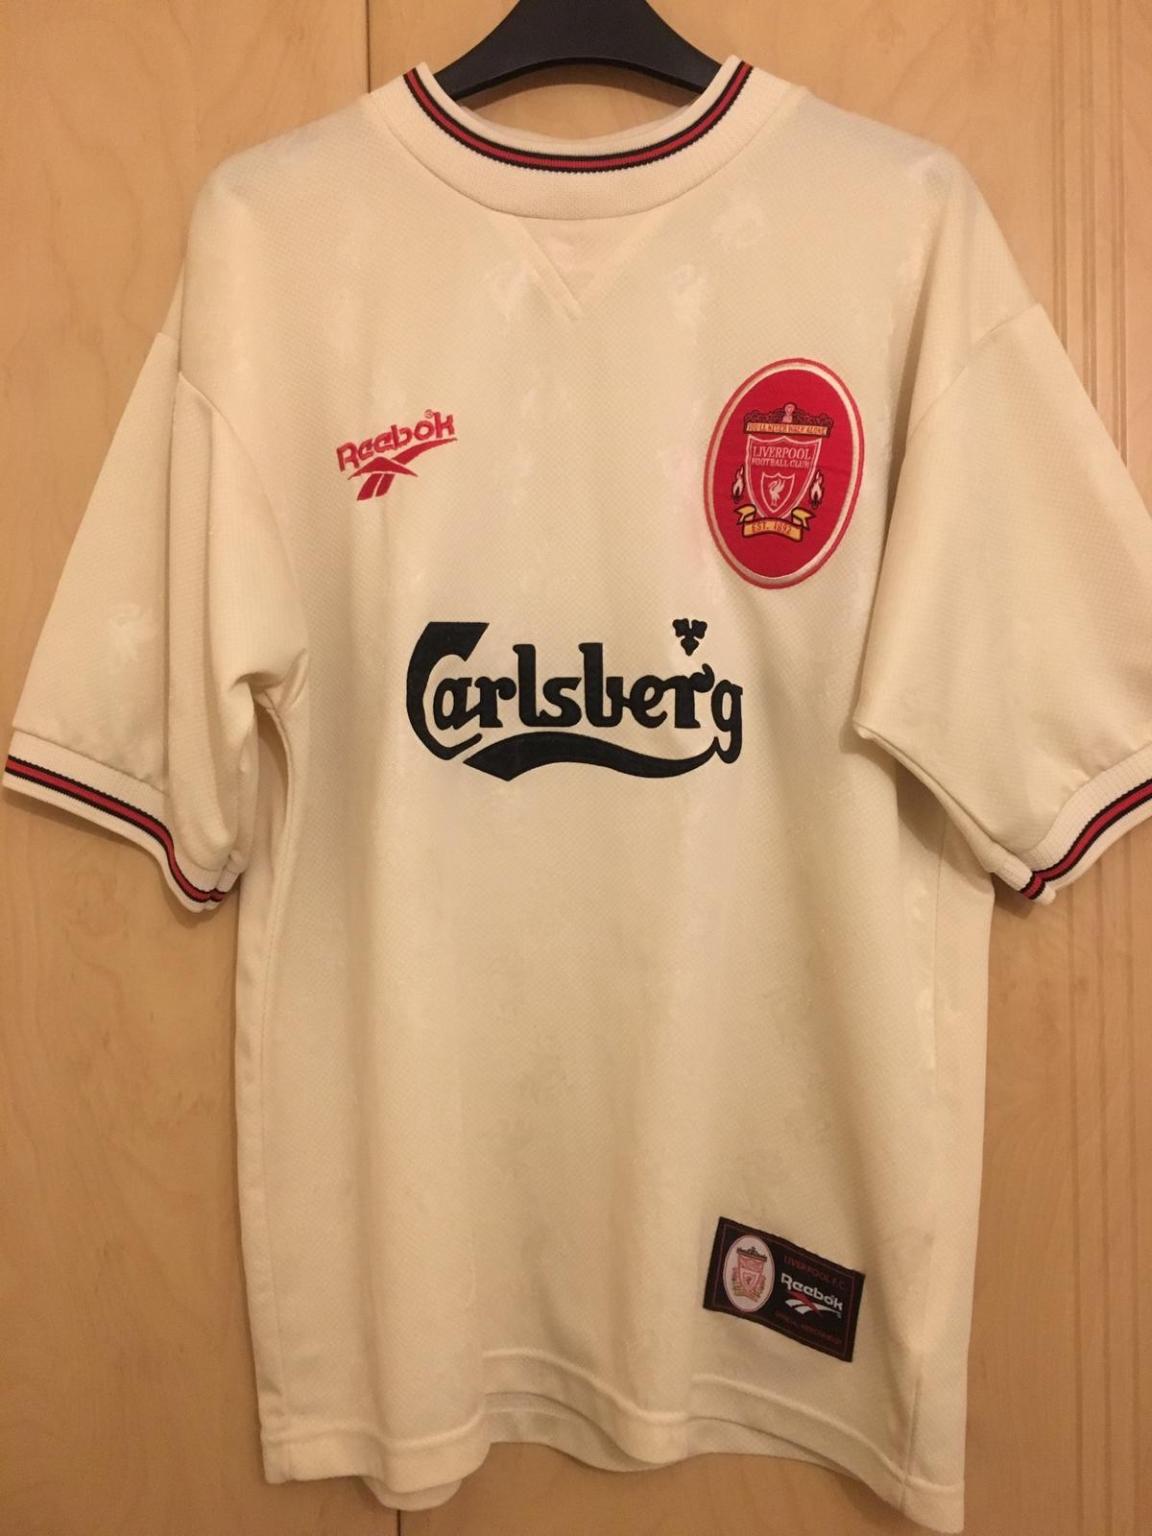 liverpool 1996 kit